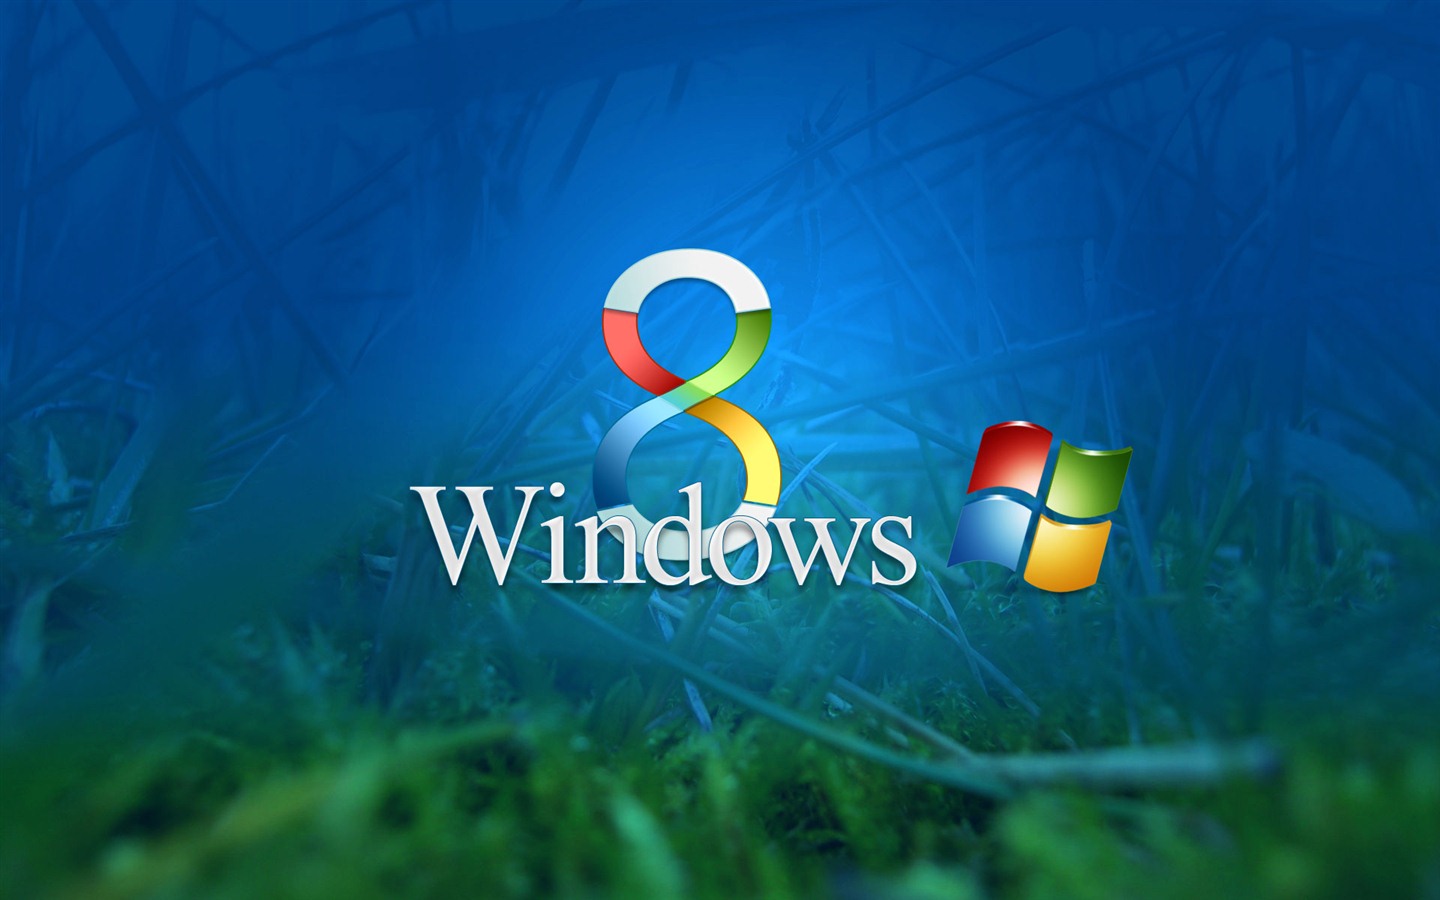 Windows 8 主题壁纸 (二)1 - 1440x900